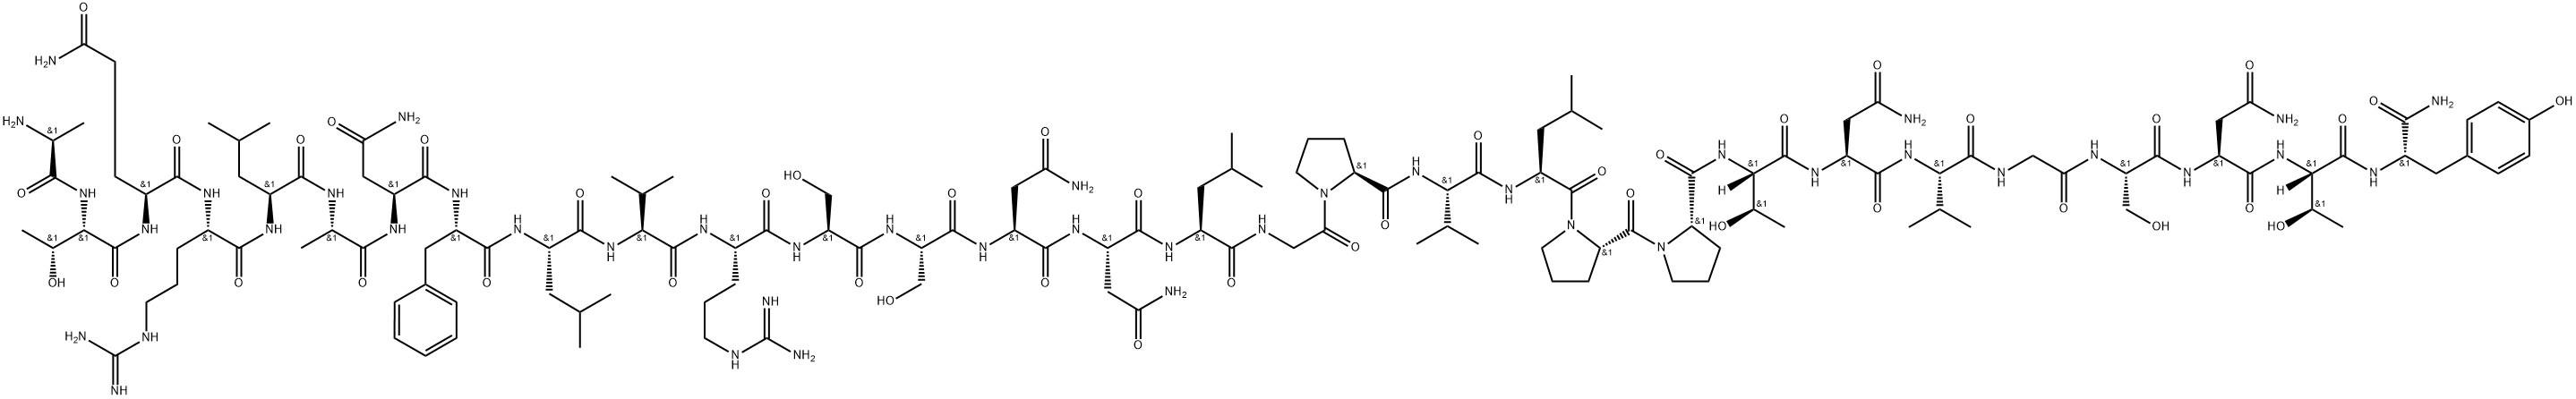 AMYLIN (8-37) (RAT), 138398-61-5, 结构式